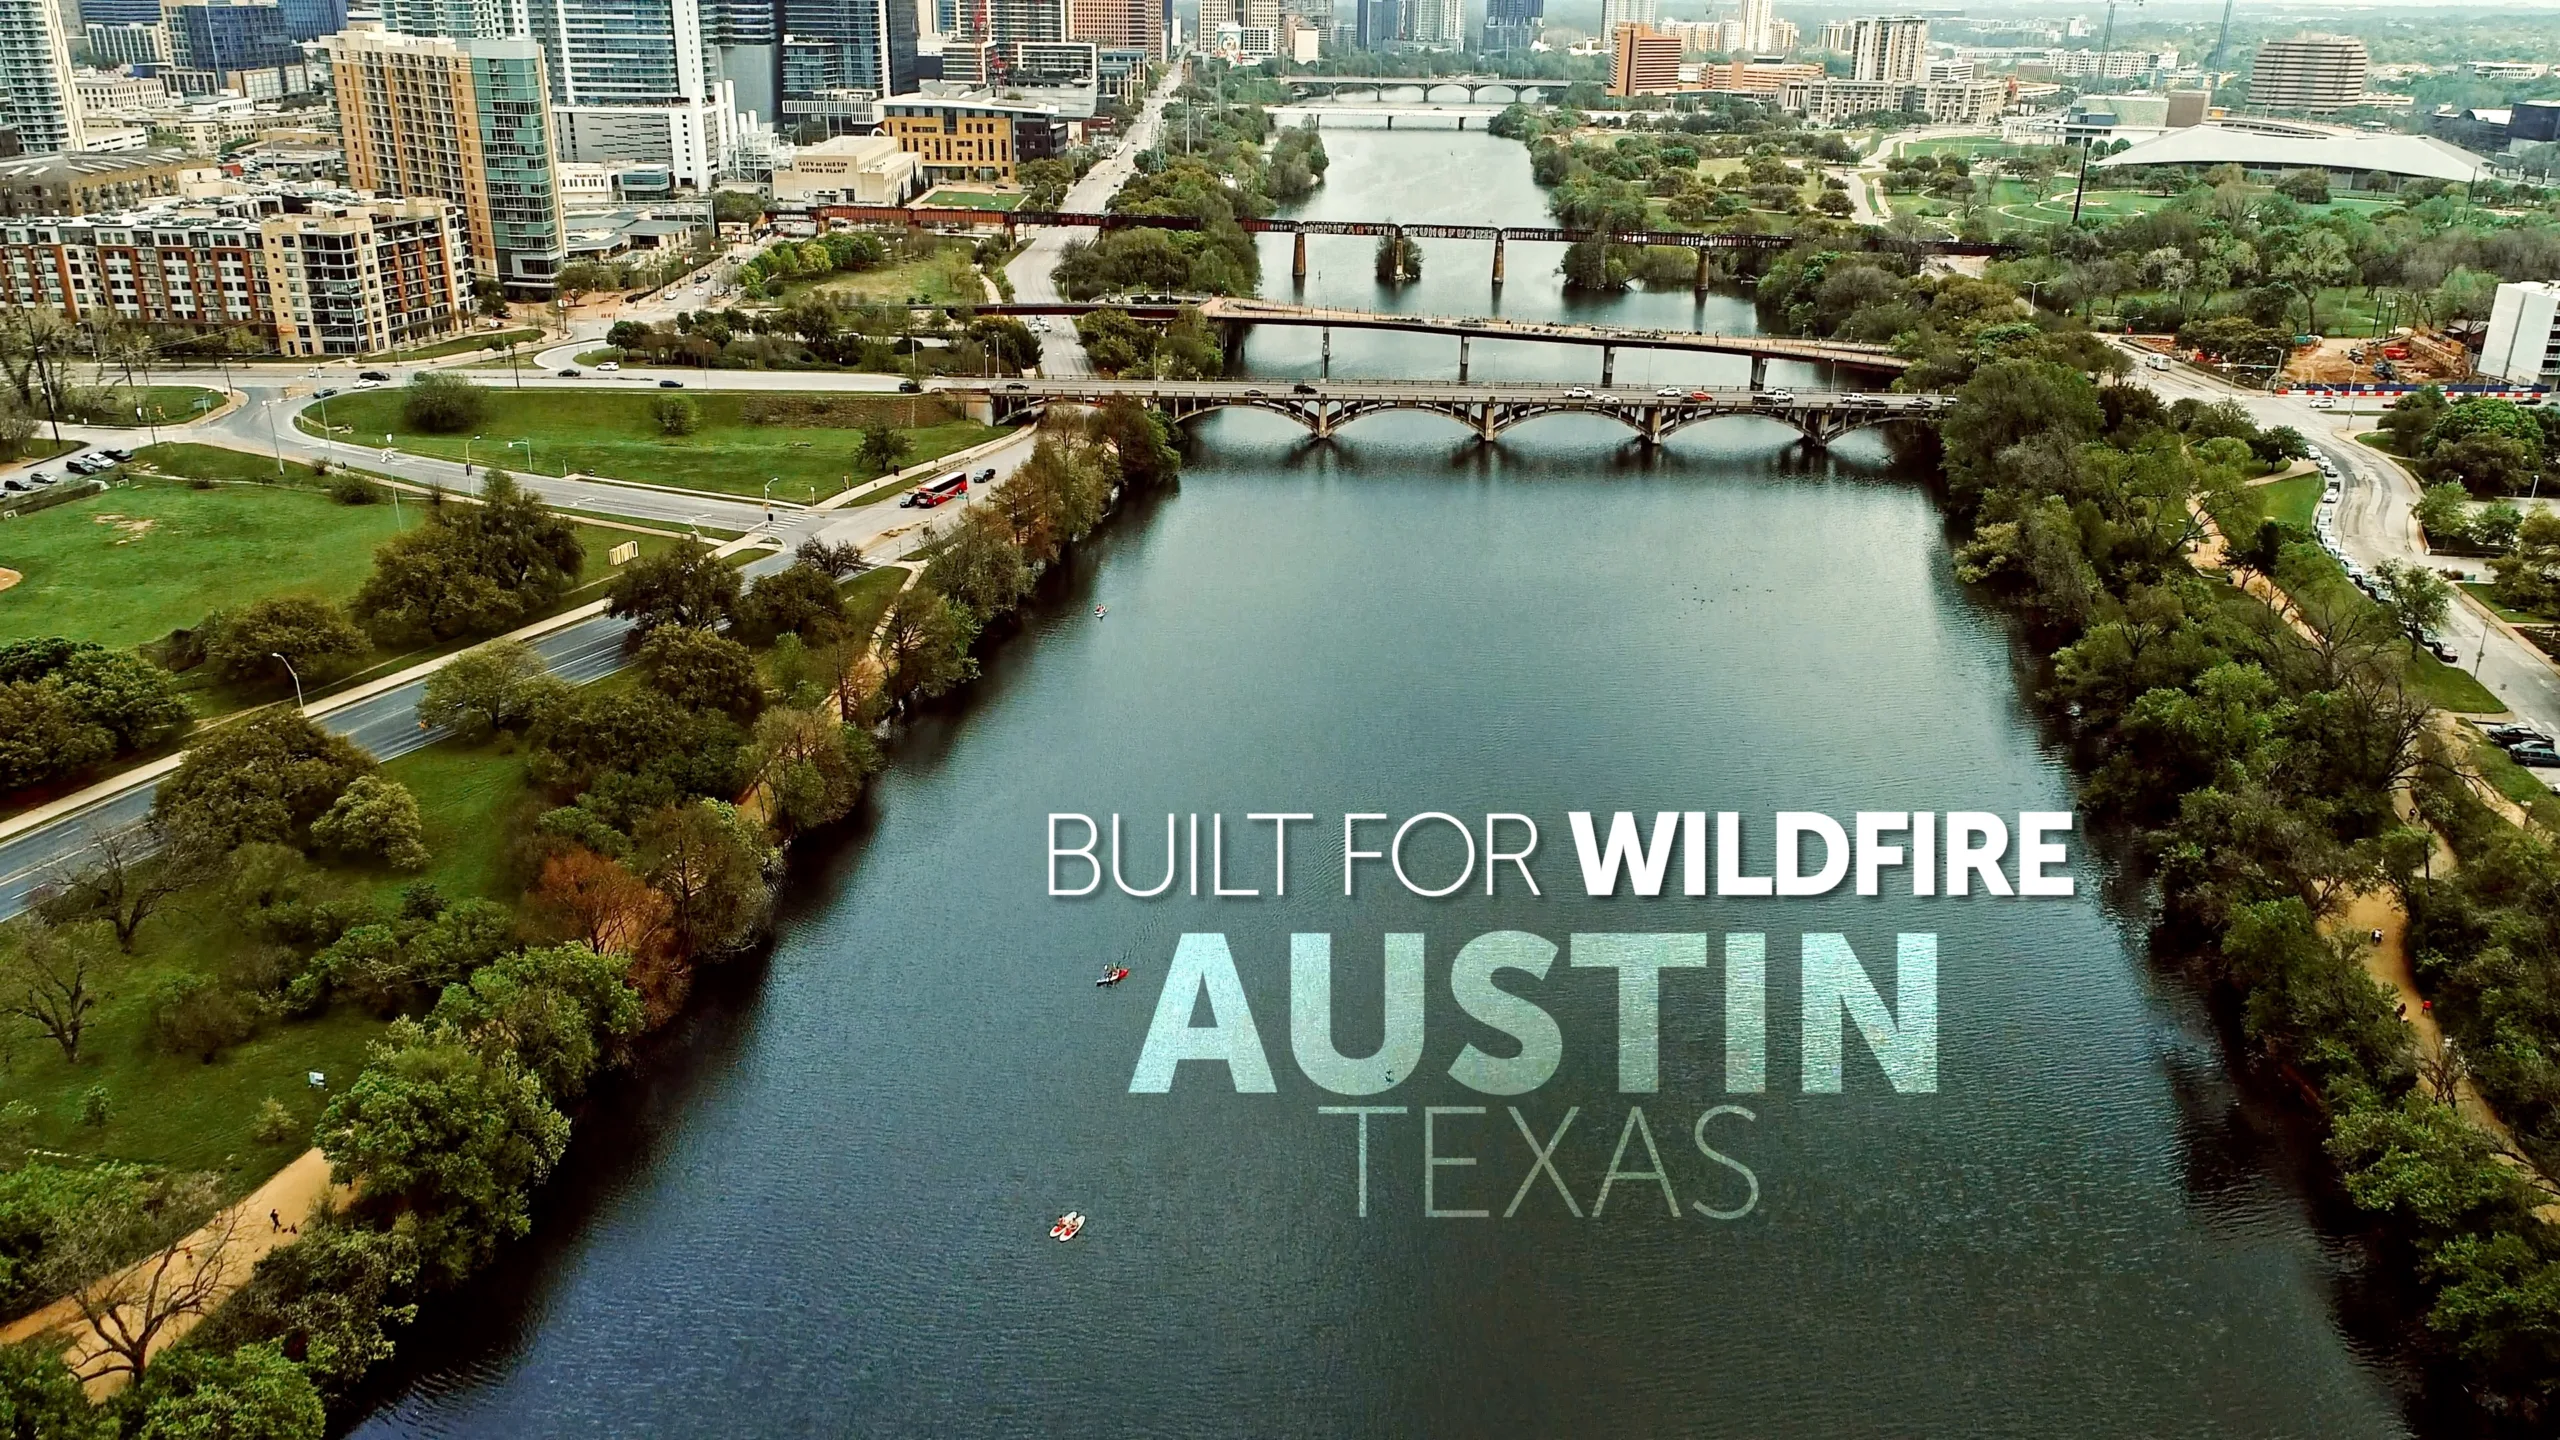 Austin, Texas: Built for Wildfire